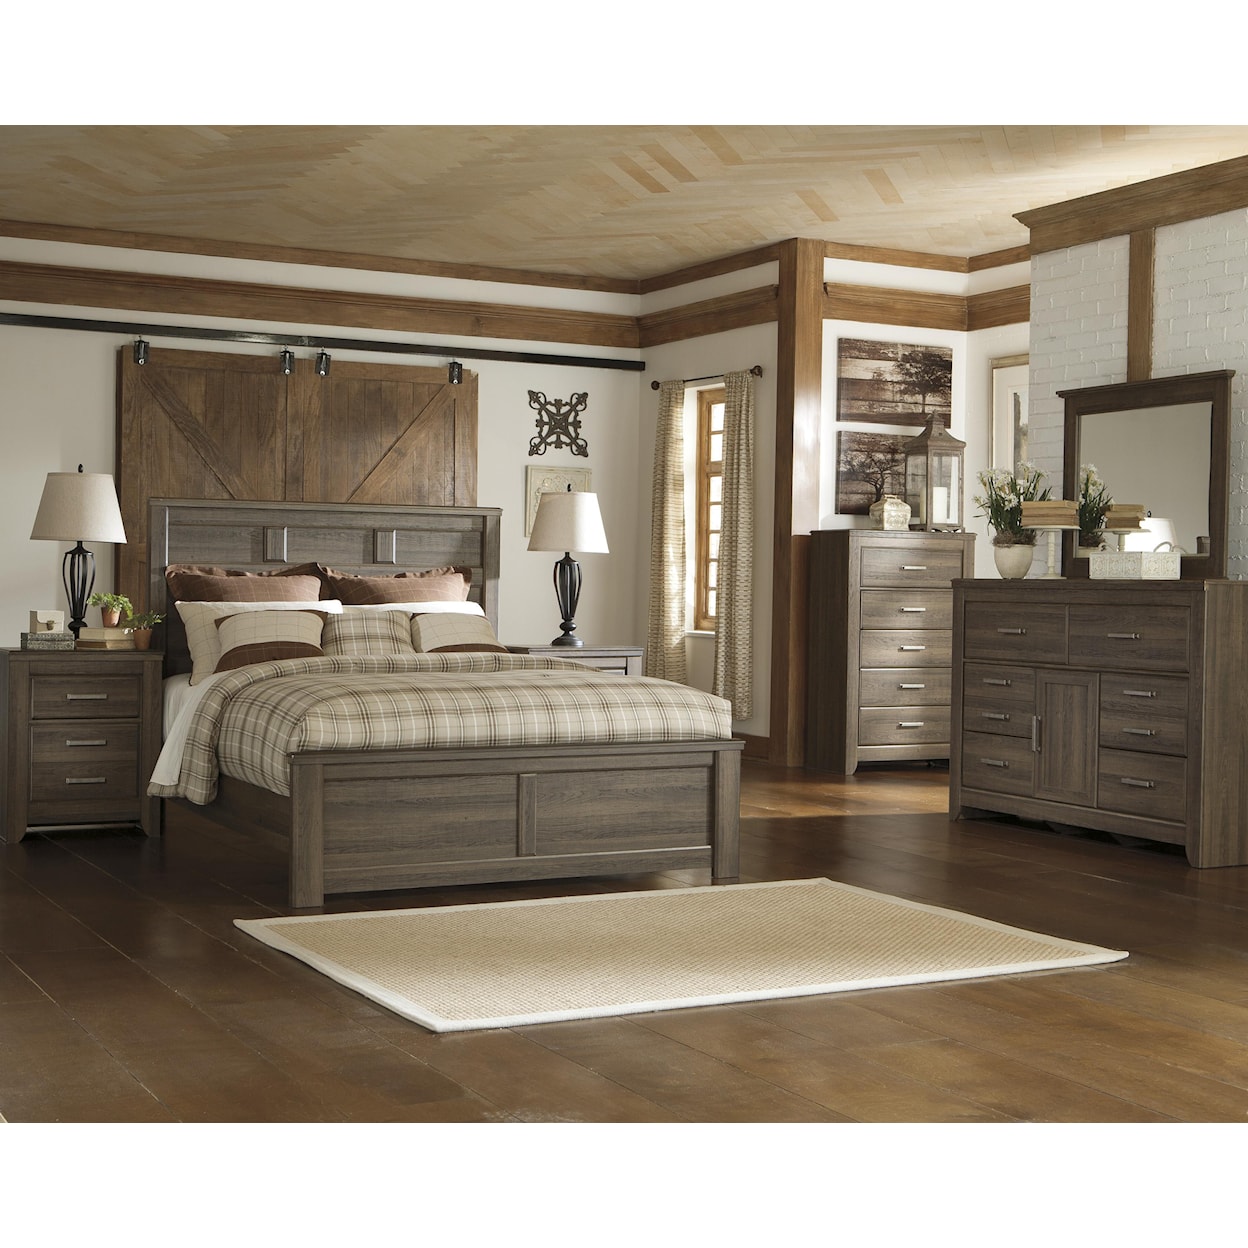 Ashley Furniture Signature Design Juararo King Bedroom Group